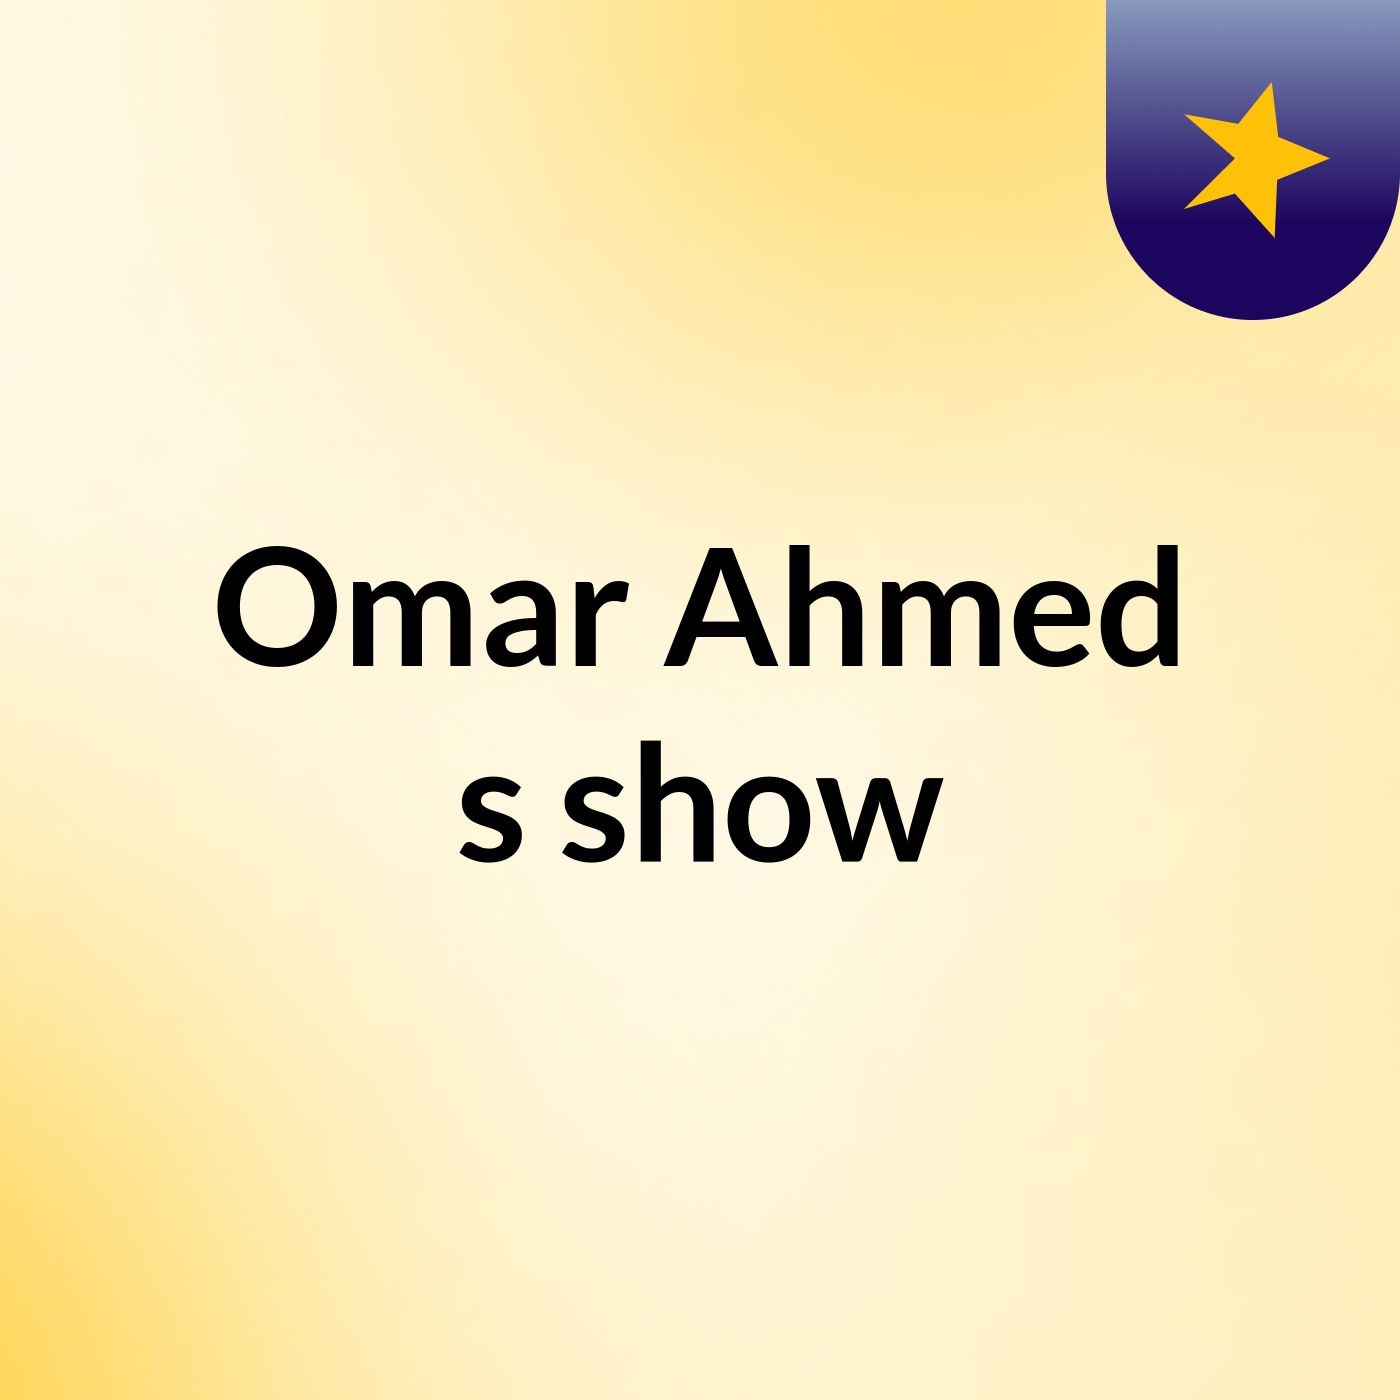 Omar Ahmed's show